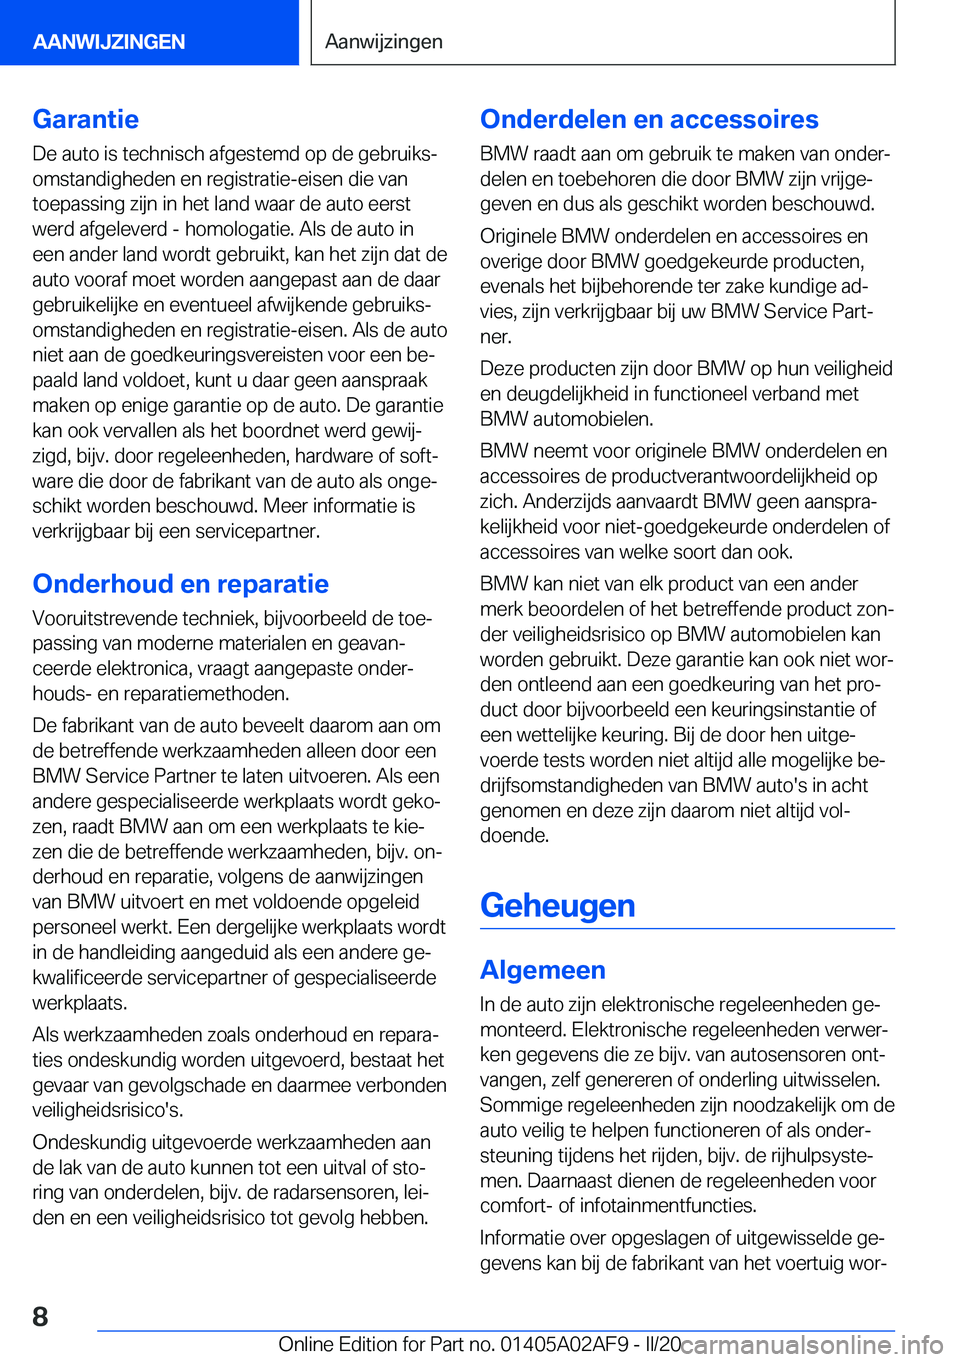 BMW X1 2020  Instructieboekjes (in Dutch) �G�a�r�a�n�t�i�e�D�e��a�u�t�o��i�s��t�e�c�h�n�i�s�c�h��a�f�g�e�s�t�e�m�d��o�p��d�e��g�e�b�r�u�i�k�sj
�o�m�s�t�a�n�d�i�g�h�e�d�e�n��e�n��r�e�g�i�s�t�r�a�t�i�e�-�e�i�s�e�n��d�i�e��v�a�n �t�o